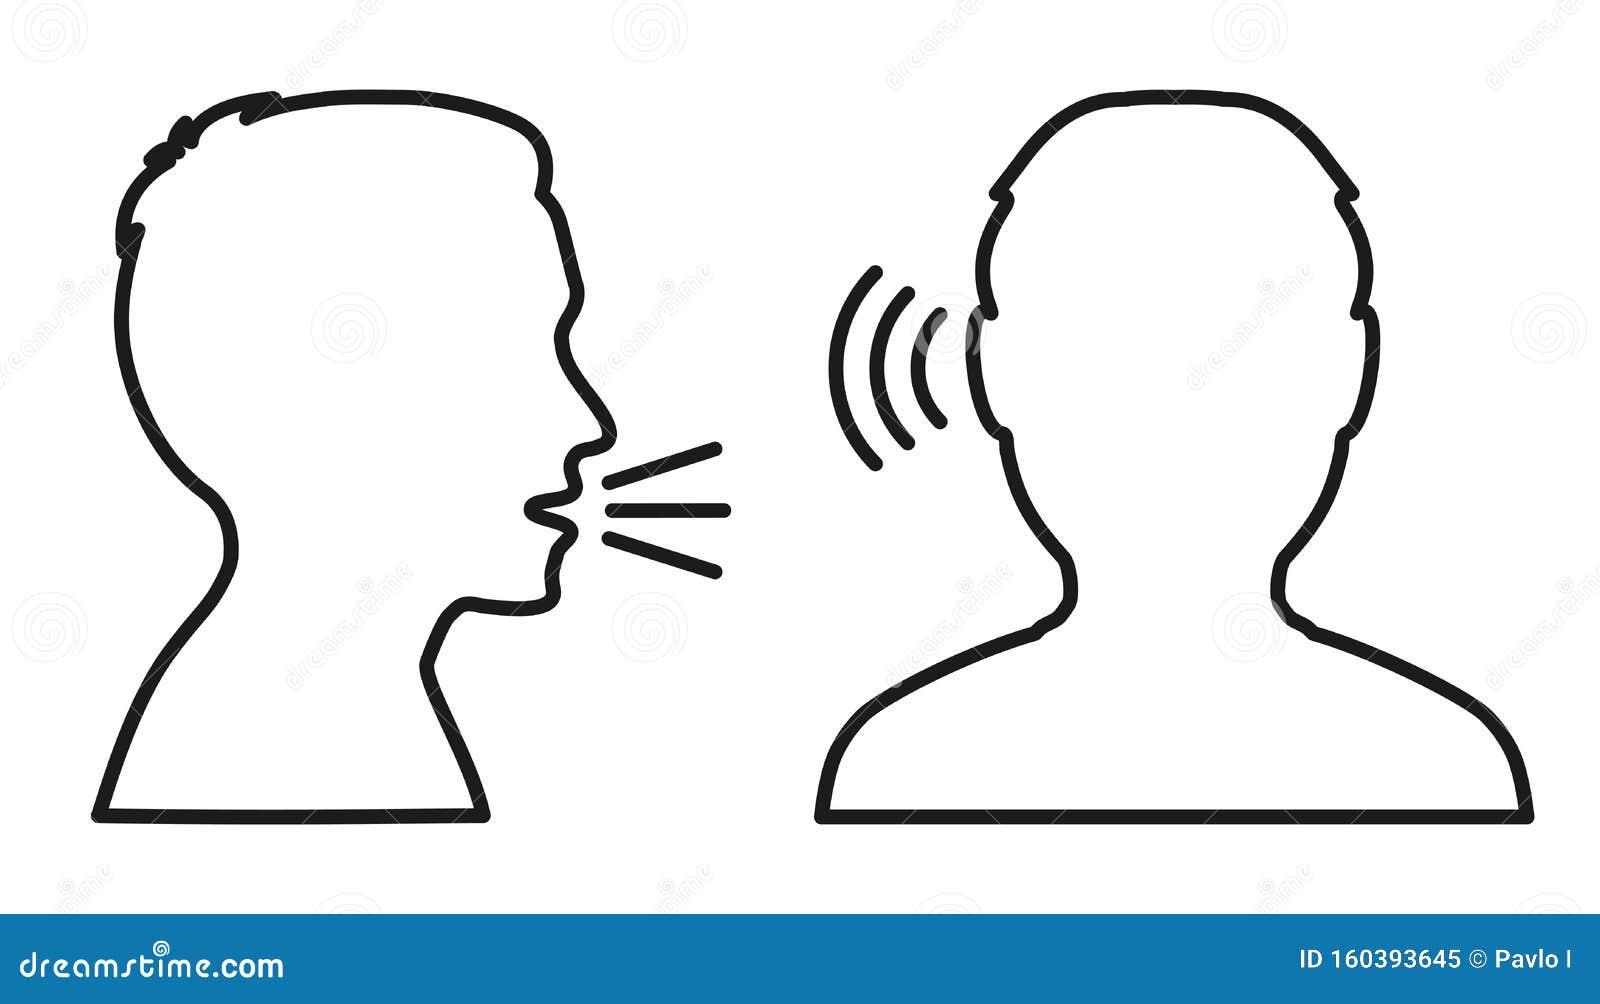 people talk: speak and listen Ã¢â¬â 